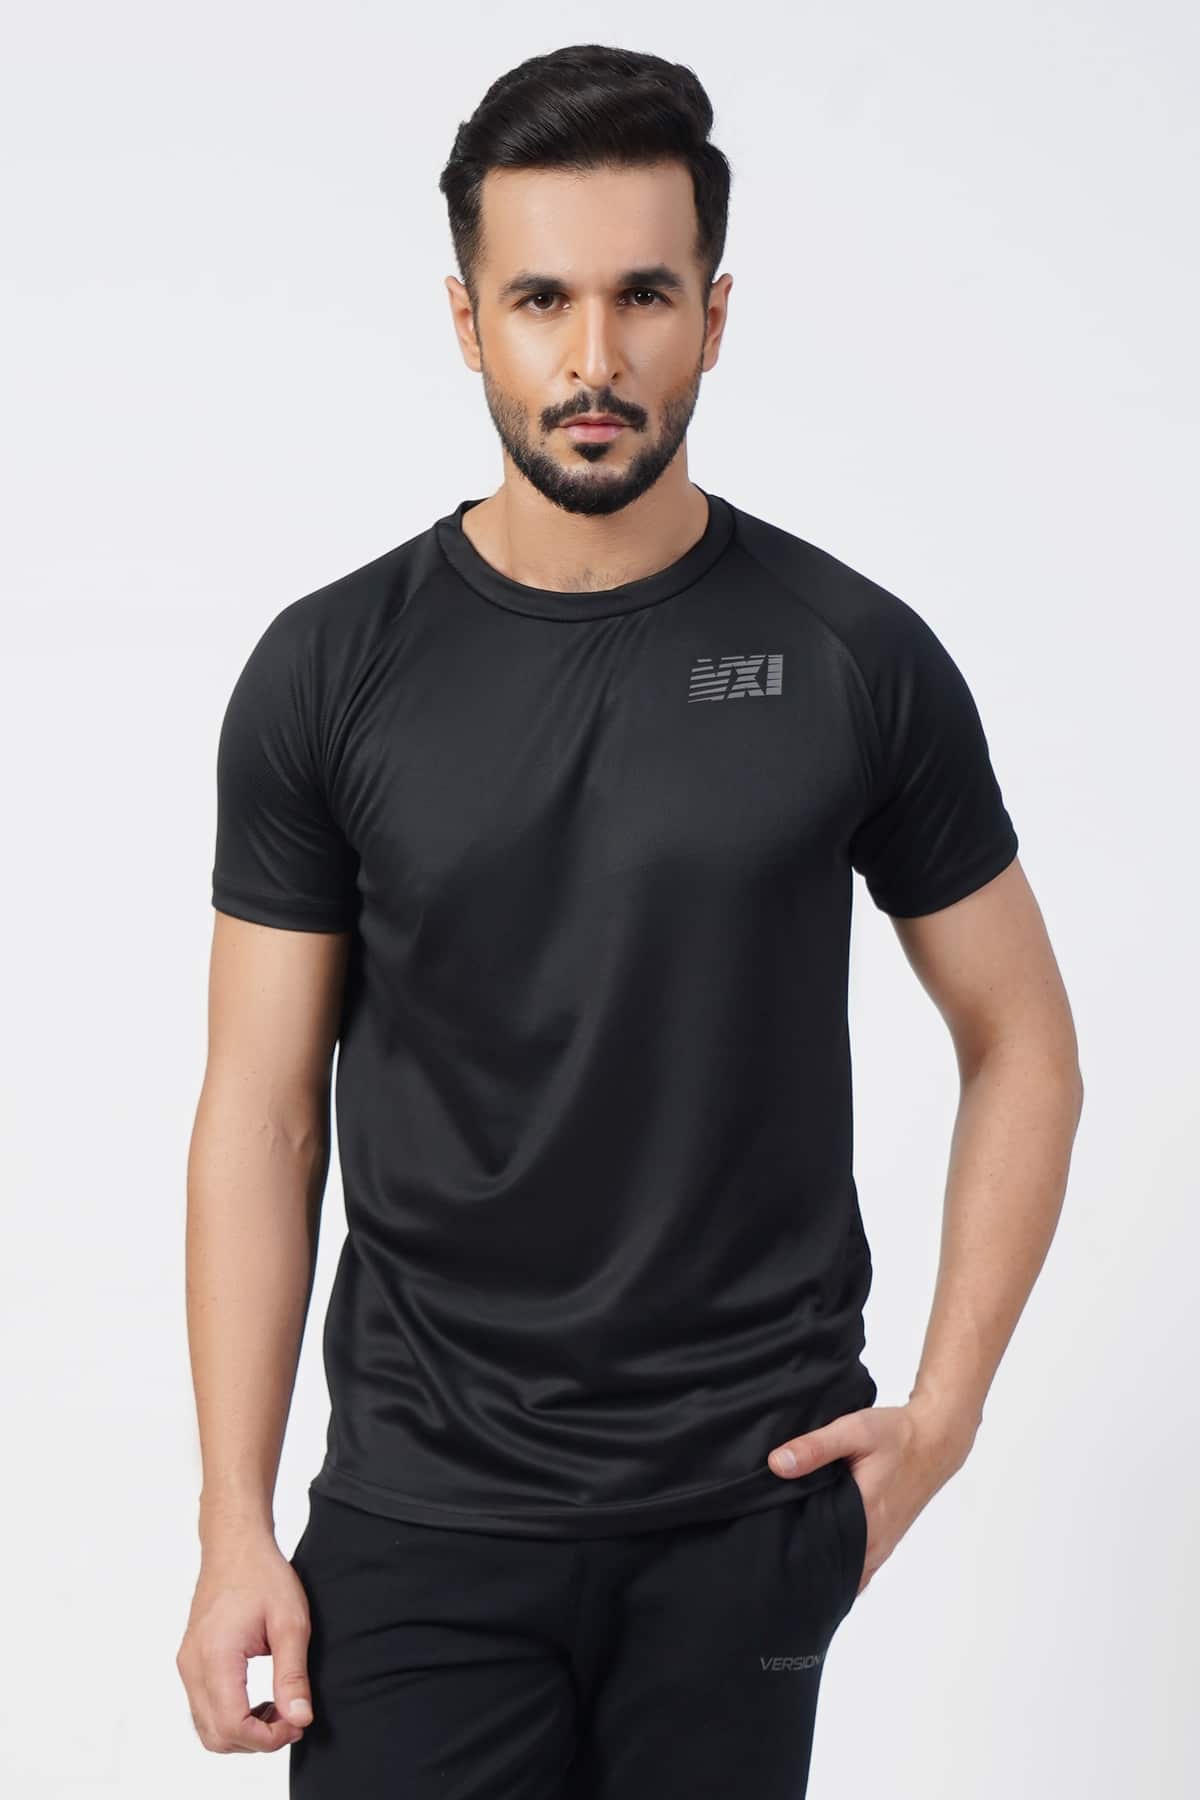 Micro Mesh Men's Black T-Shirt for sports in Pakistan - Version XI